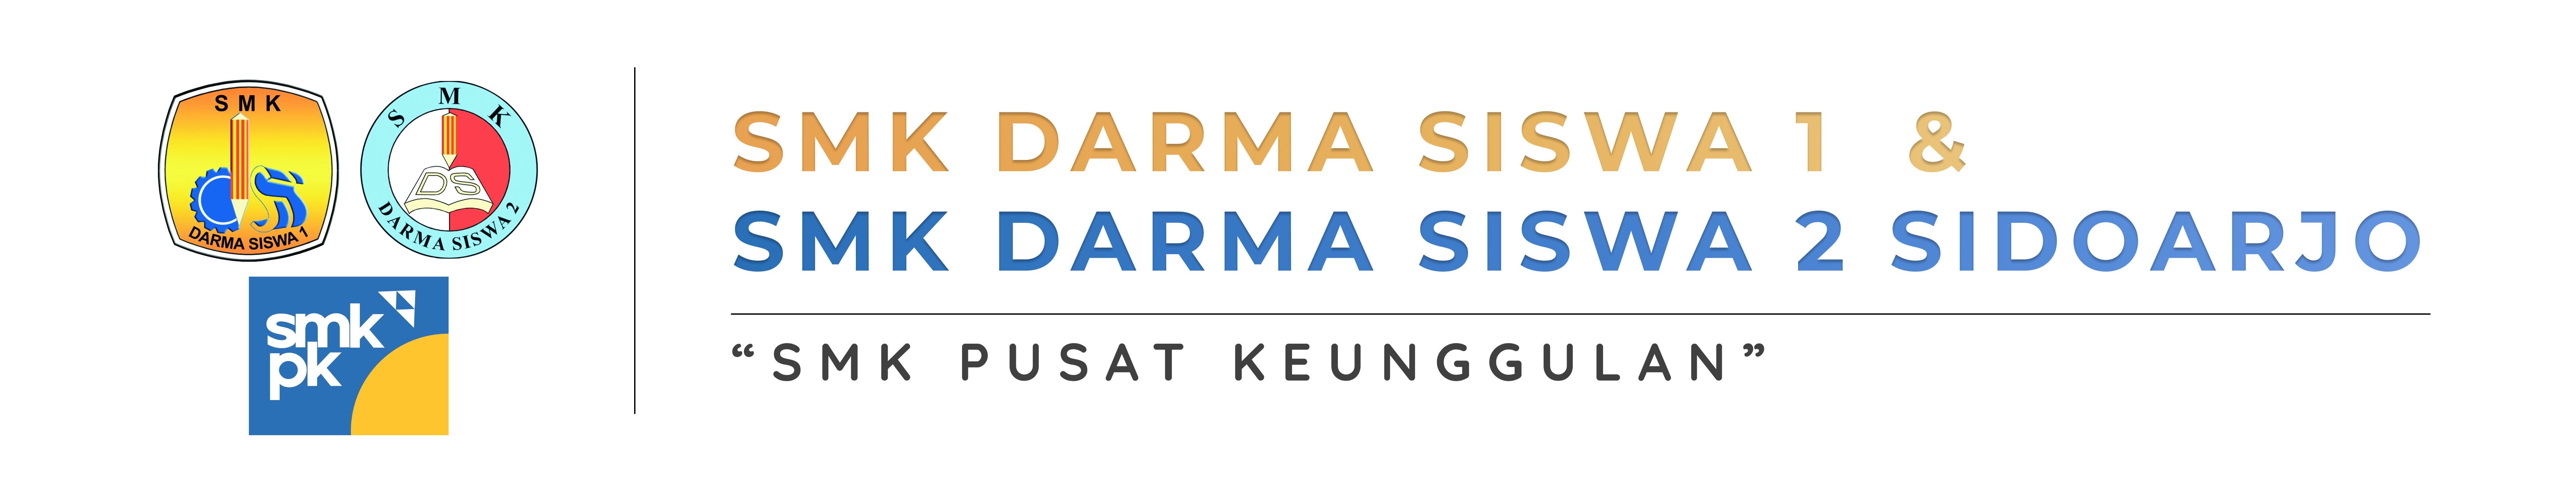 SMK DARMA SISWA 1 & 2 SIDOARJO – SMK PUSAT KEUNGGULAN